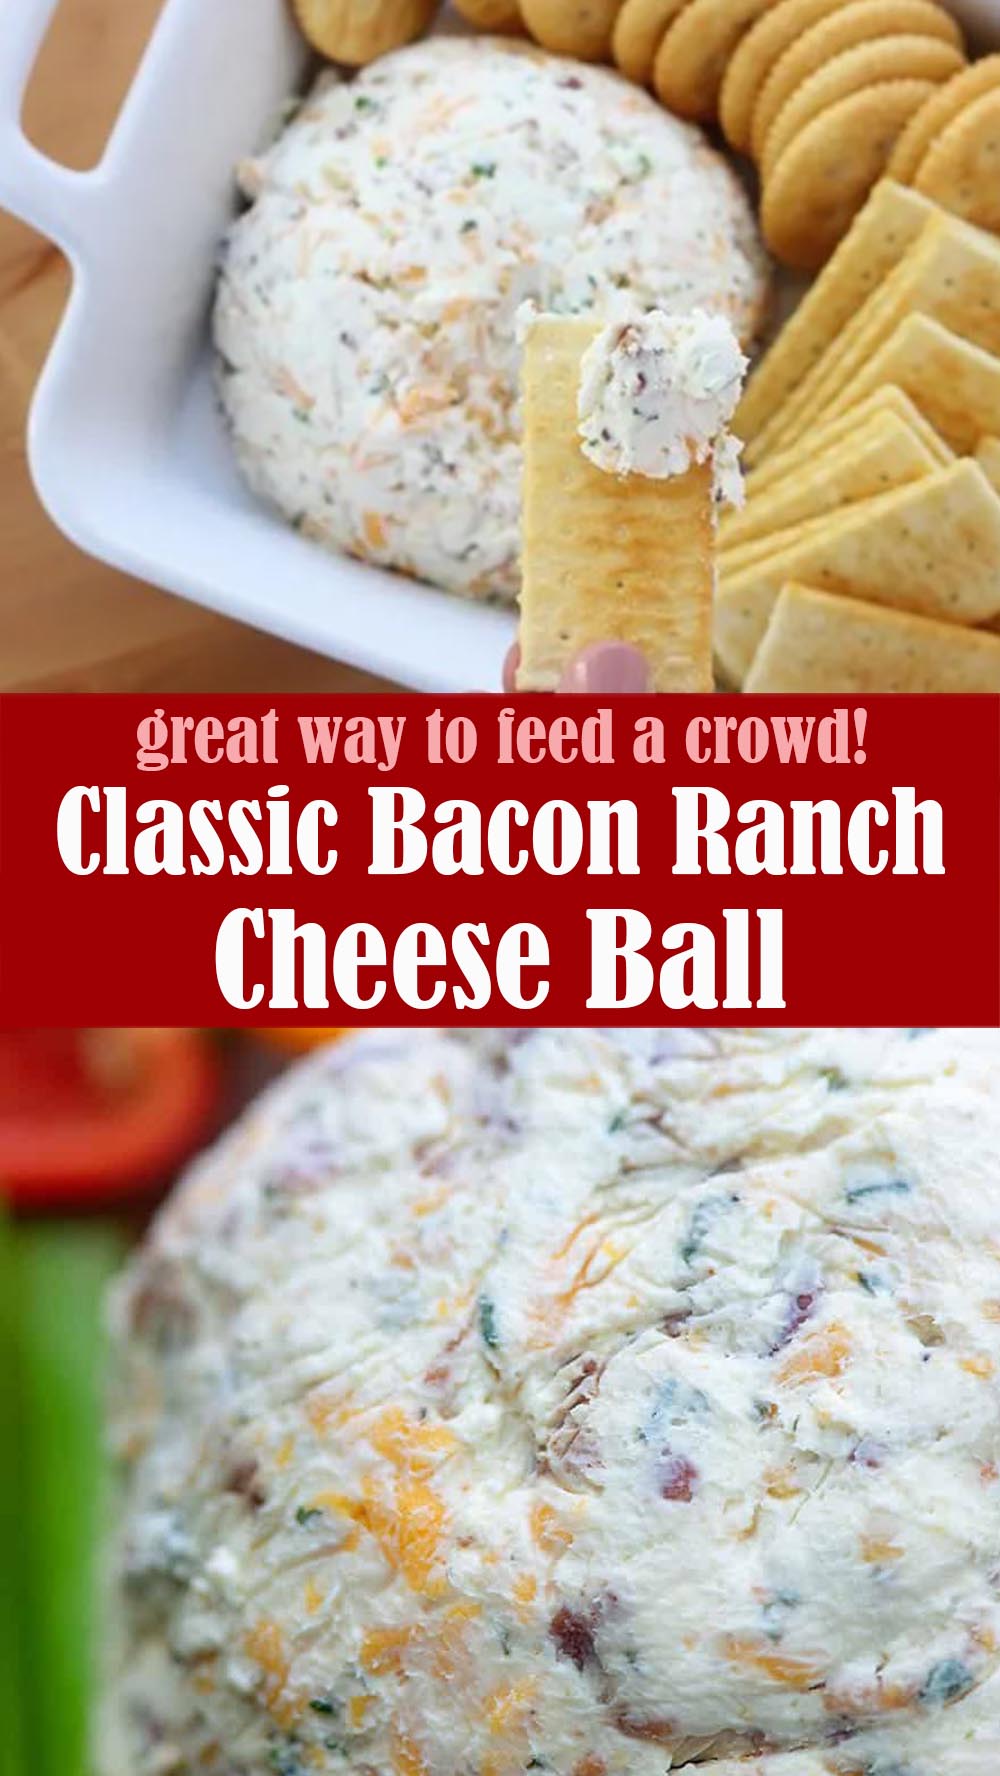 Classic Bacon Ranch Cheese Ball